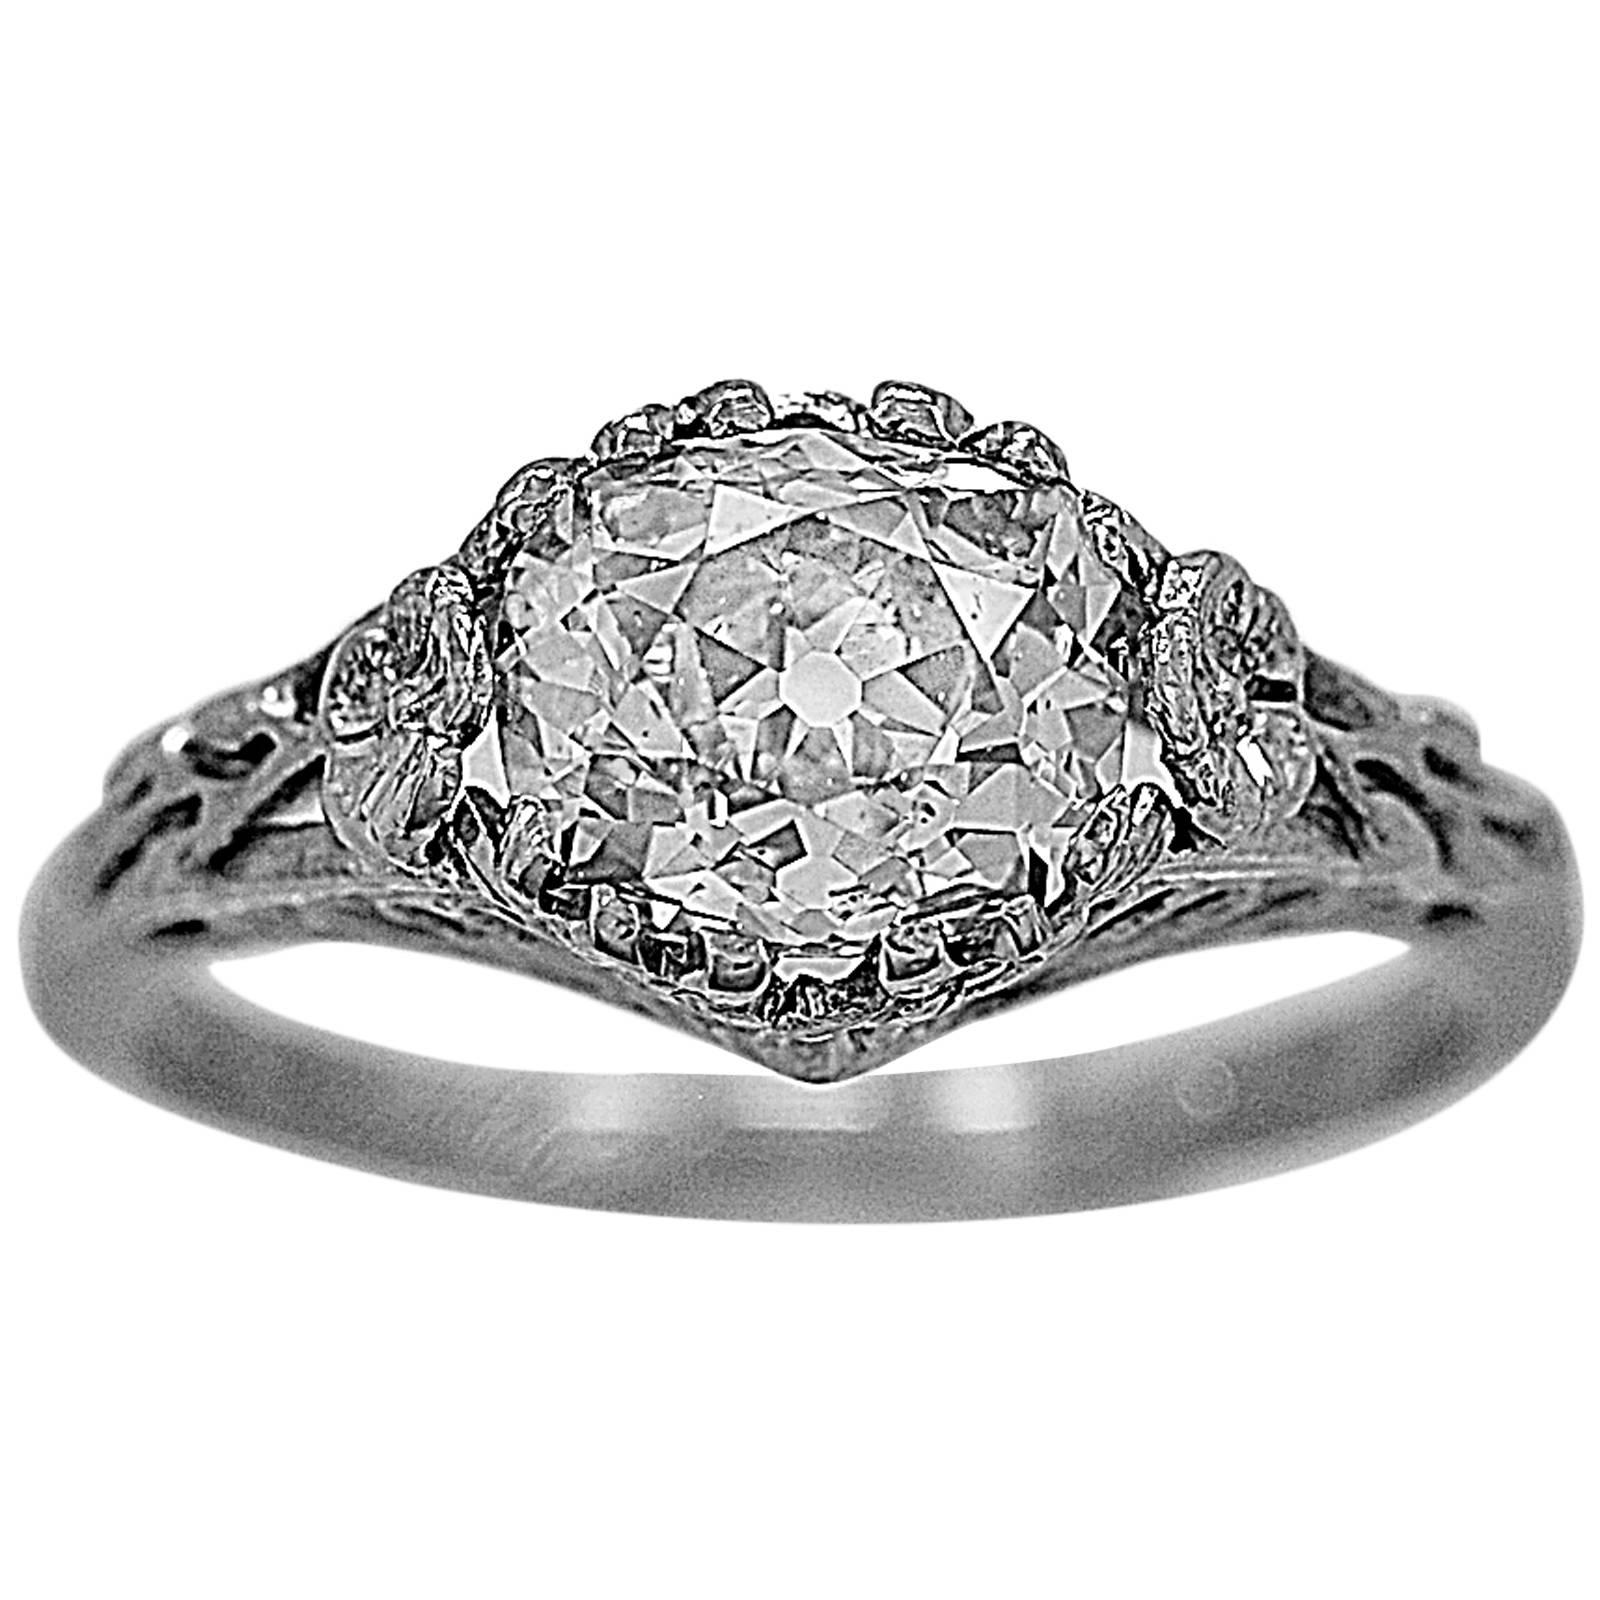 Antique Engagement Ring 1.55 Carat Diamond & 18K White Gold Edwardian